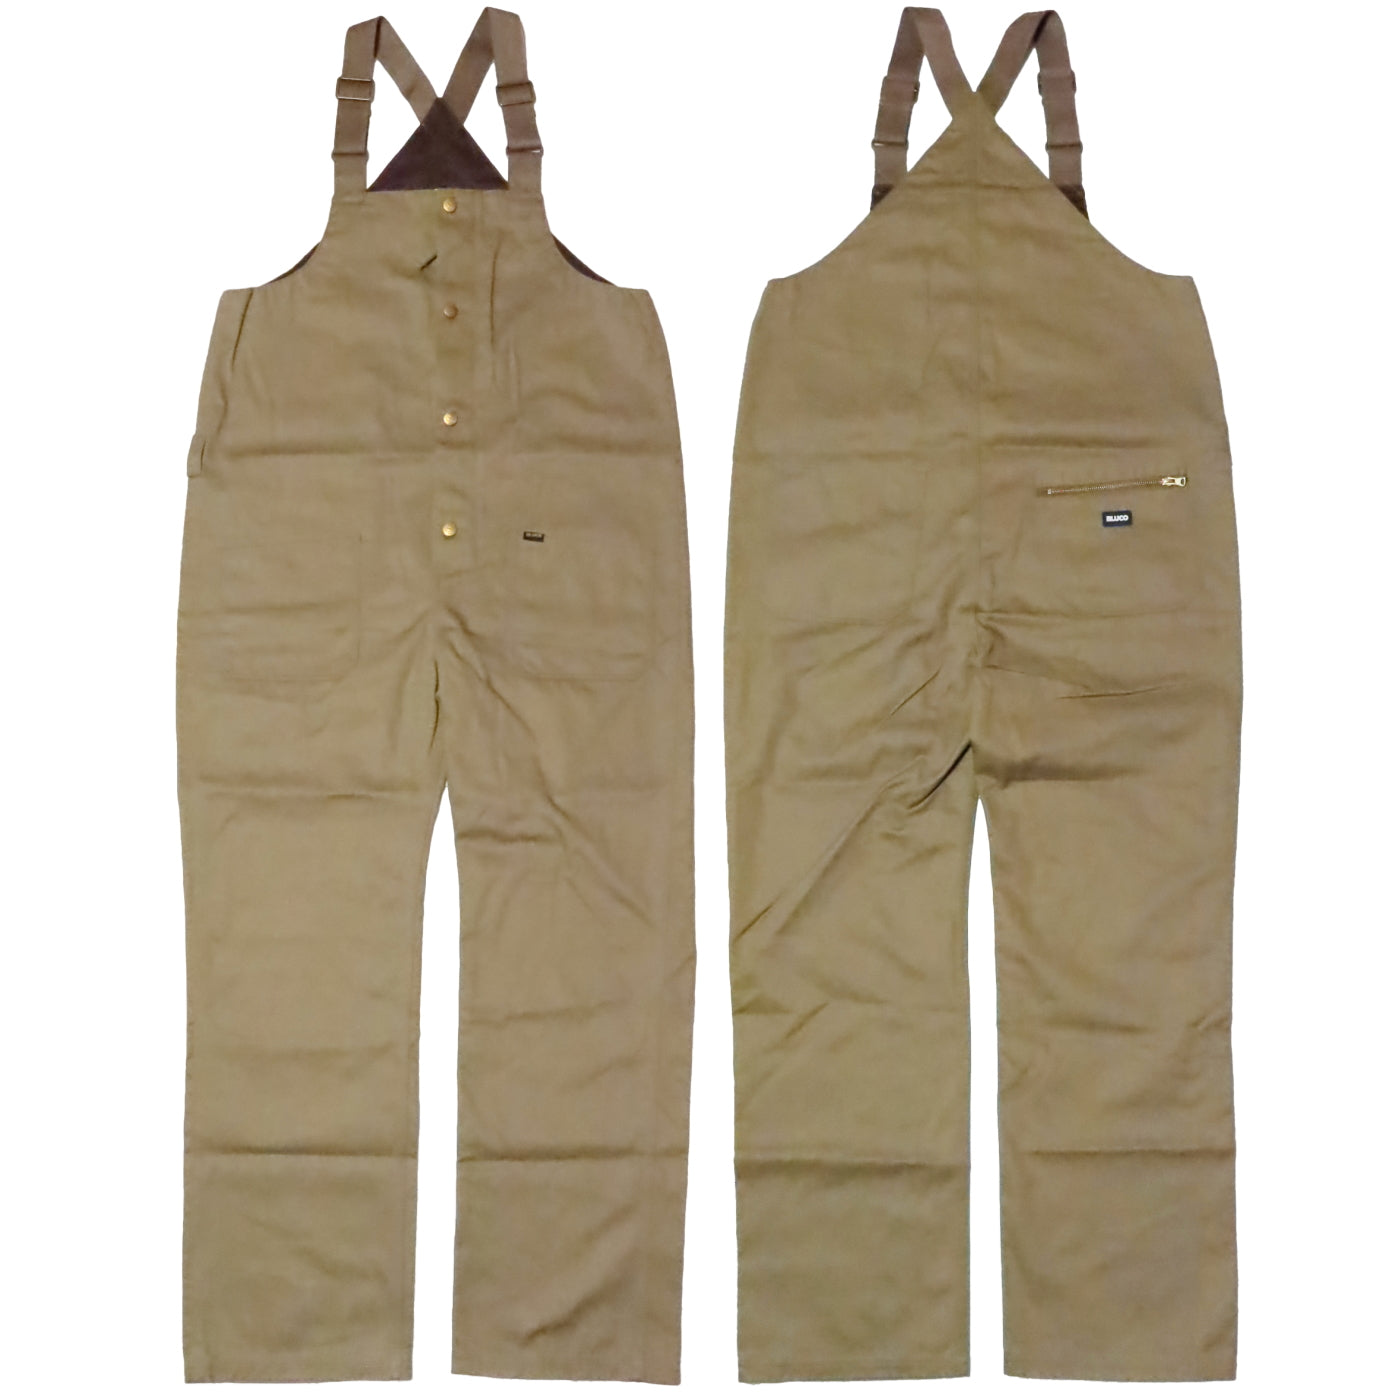 BLUCO Overalls BLUCO WORK GARMENT 00150 Deck Pants TC Material 141-43-150